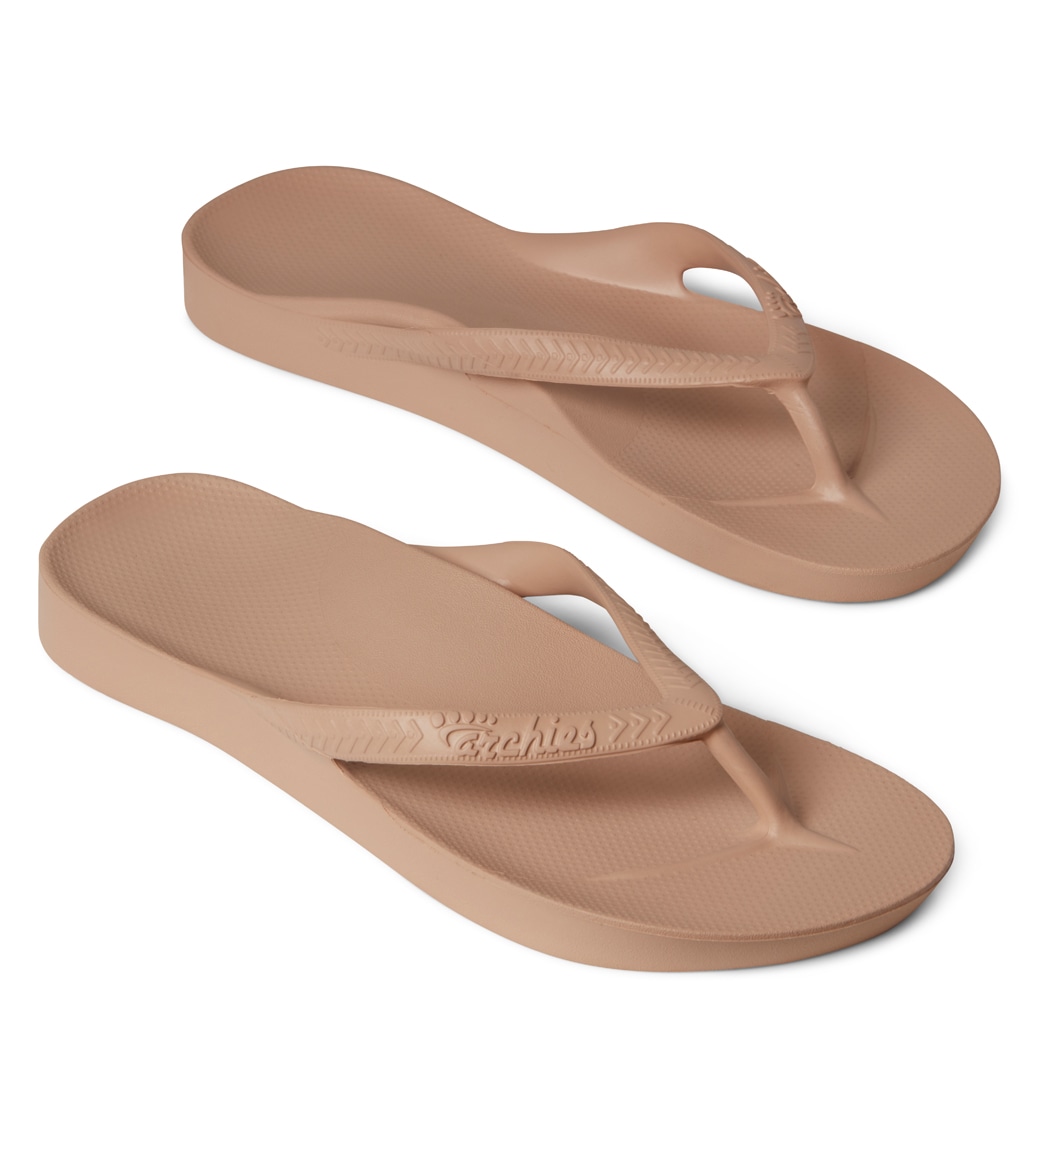 Archies Footwear Arch Support Flip Flops - Tan Men's 4 / Women's 5 - Swimoutlet.com